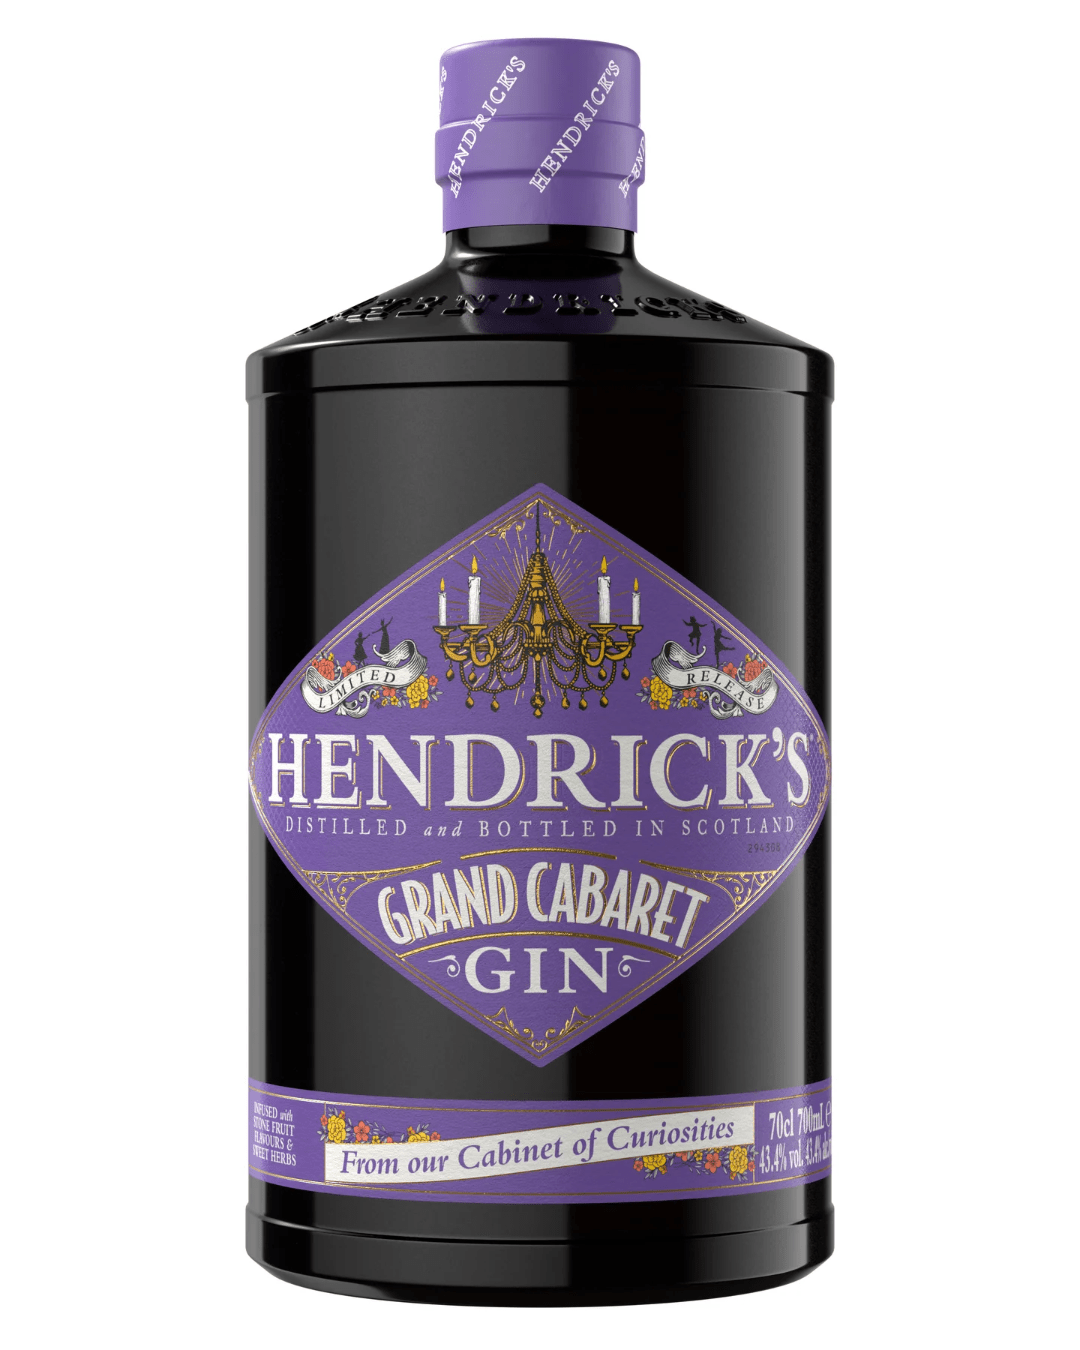 Hendrick's Grand Cabaret Gin, 70 cl Gin